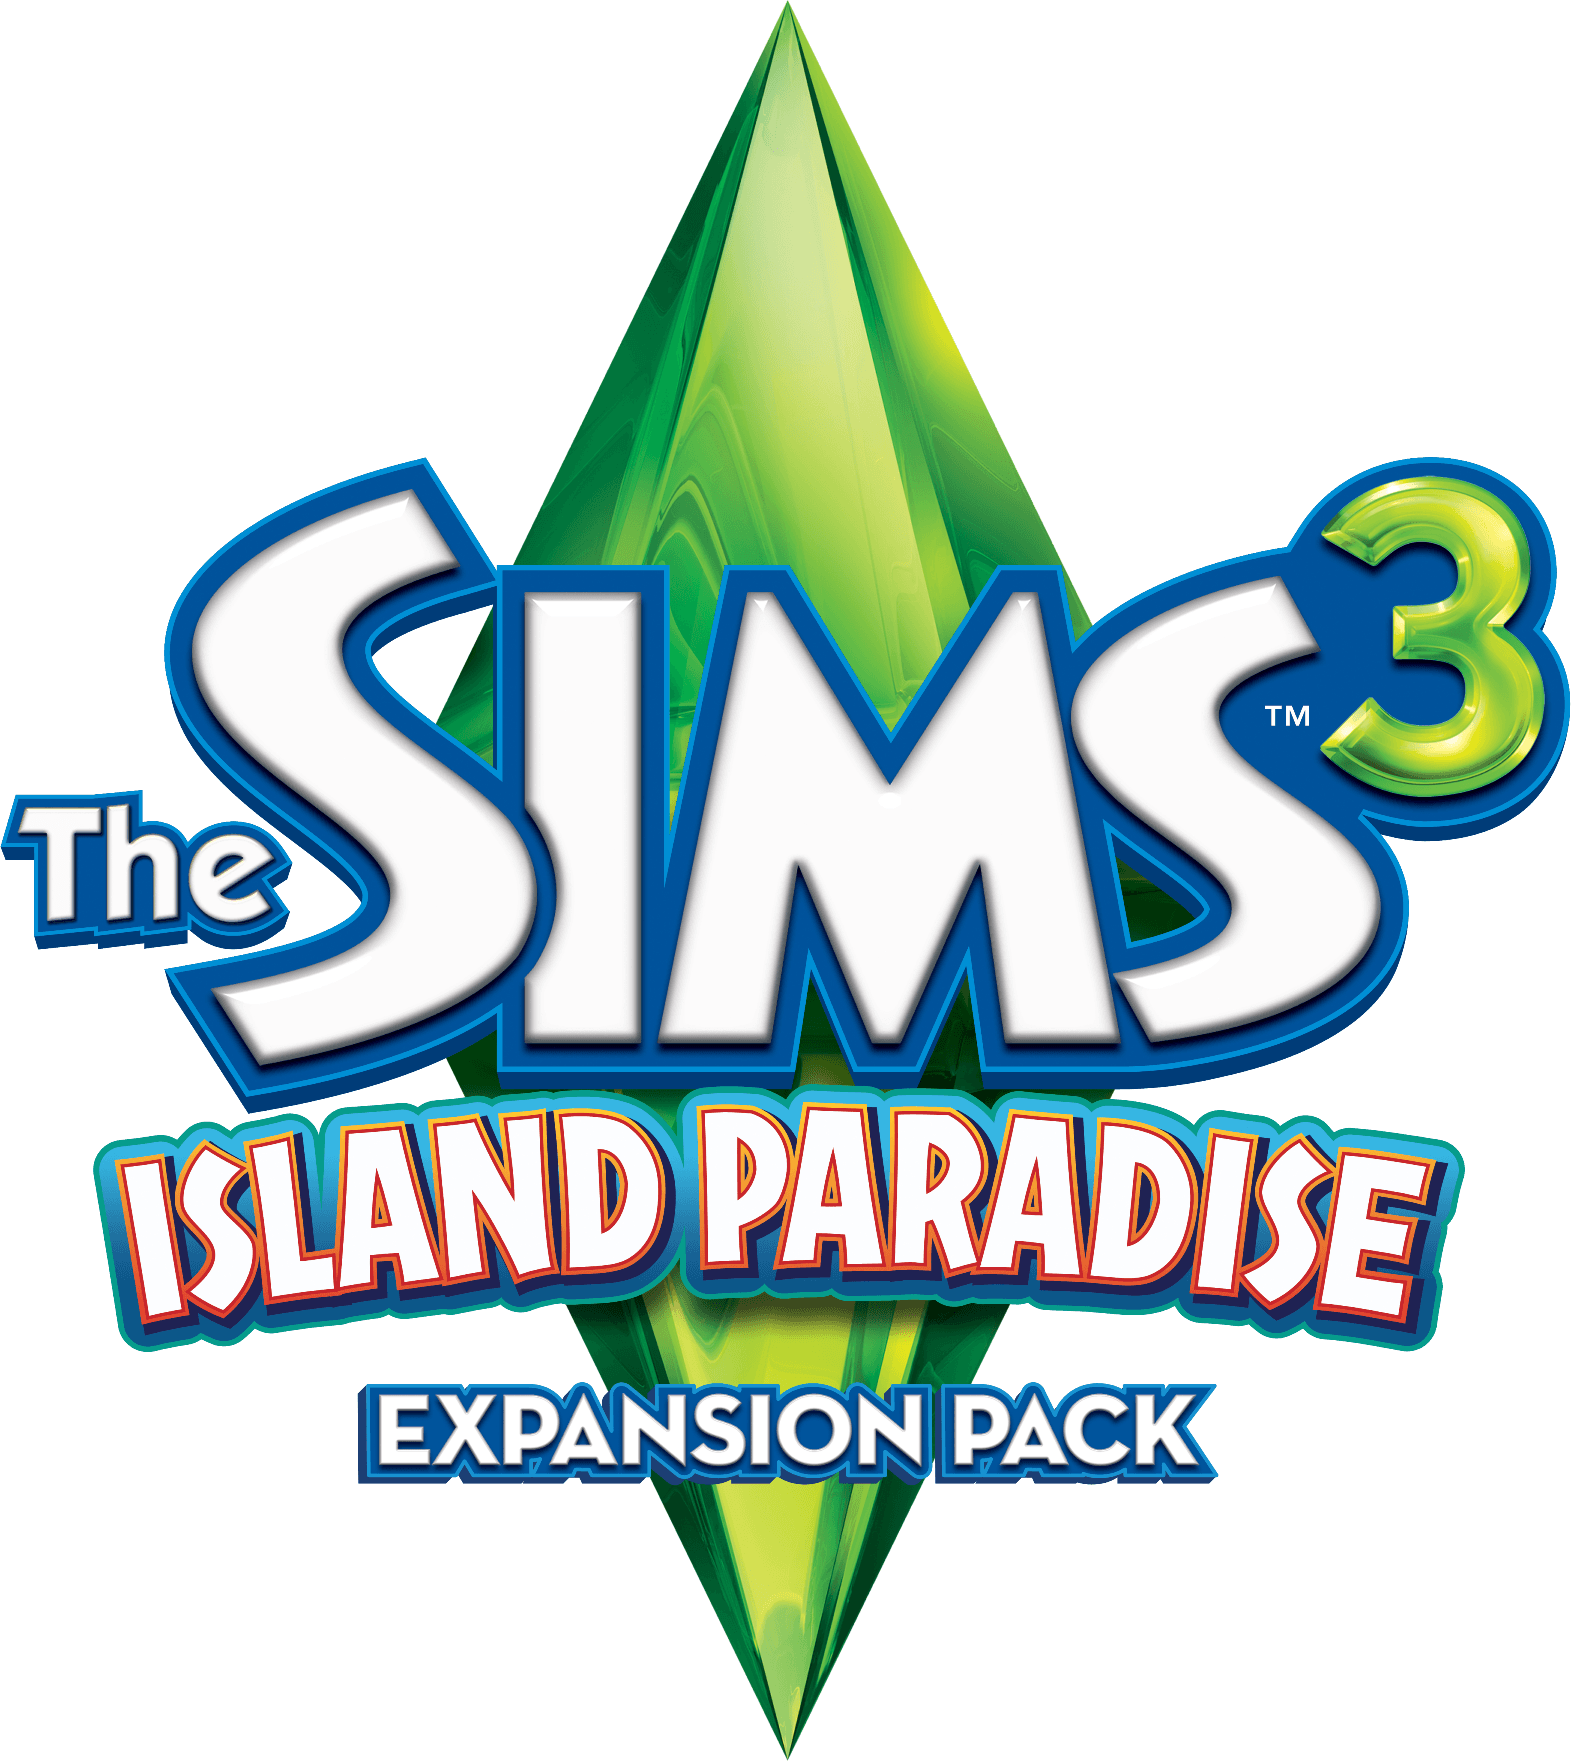 Sims 3 Logo - The Sims 3: Island Paradise